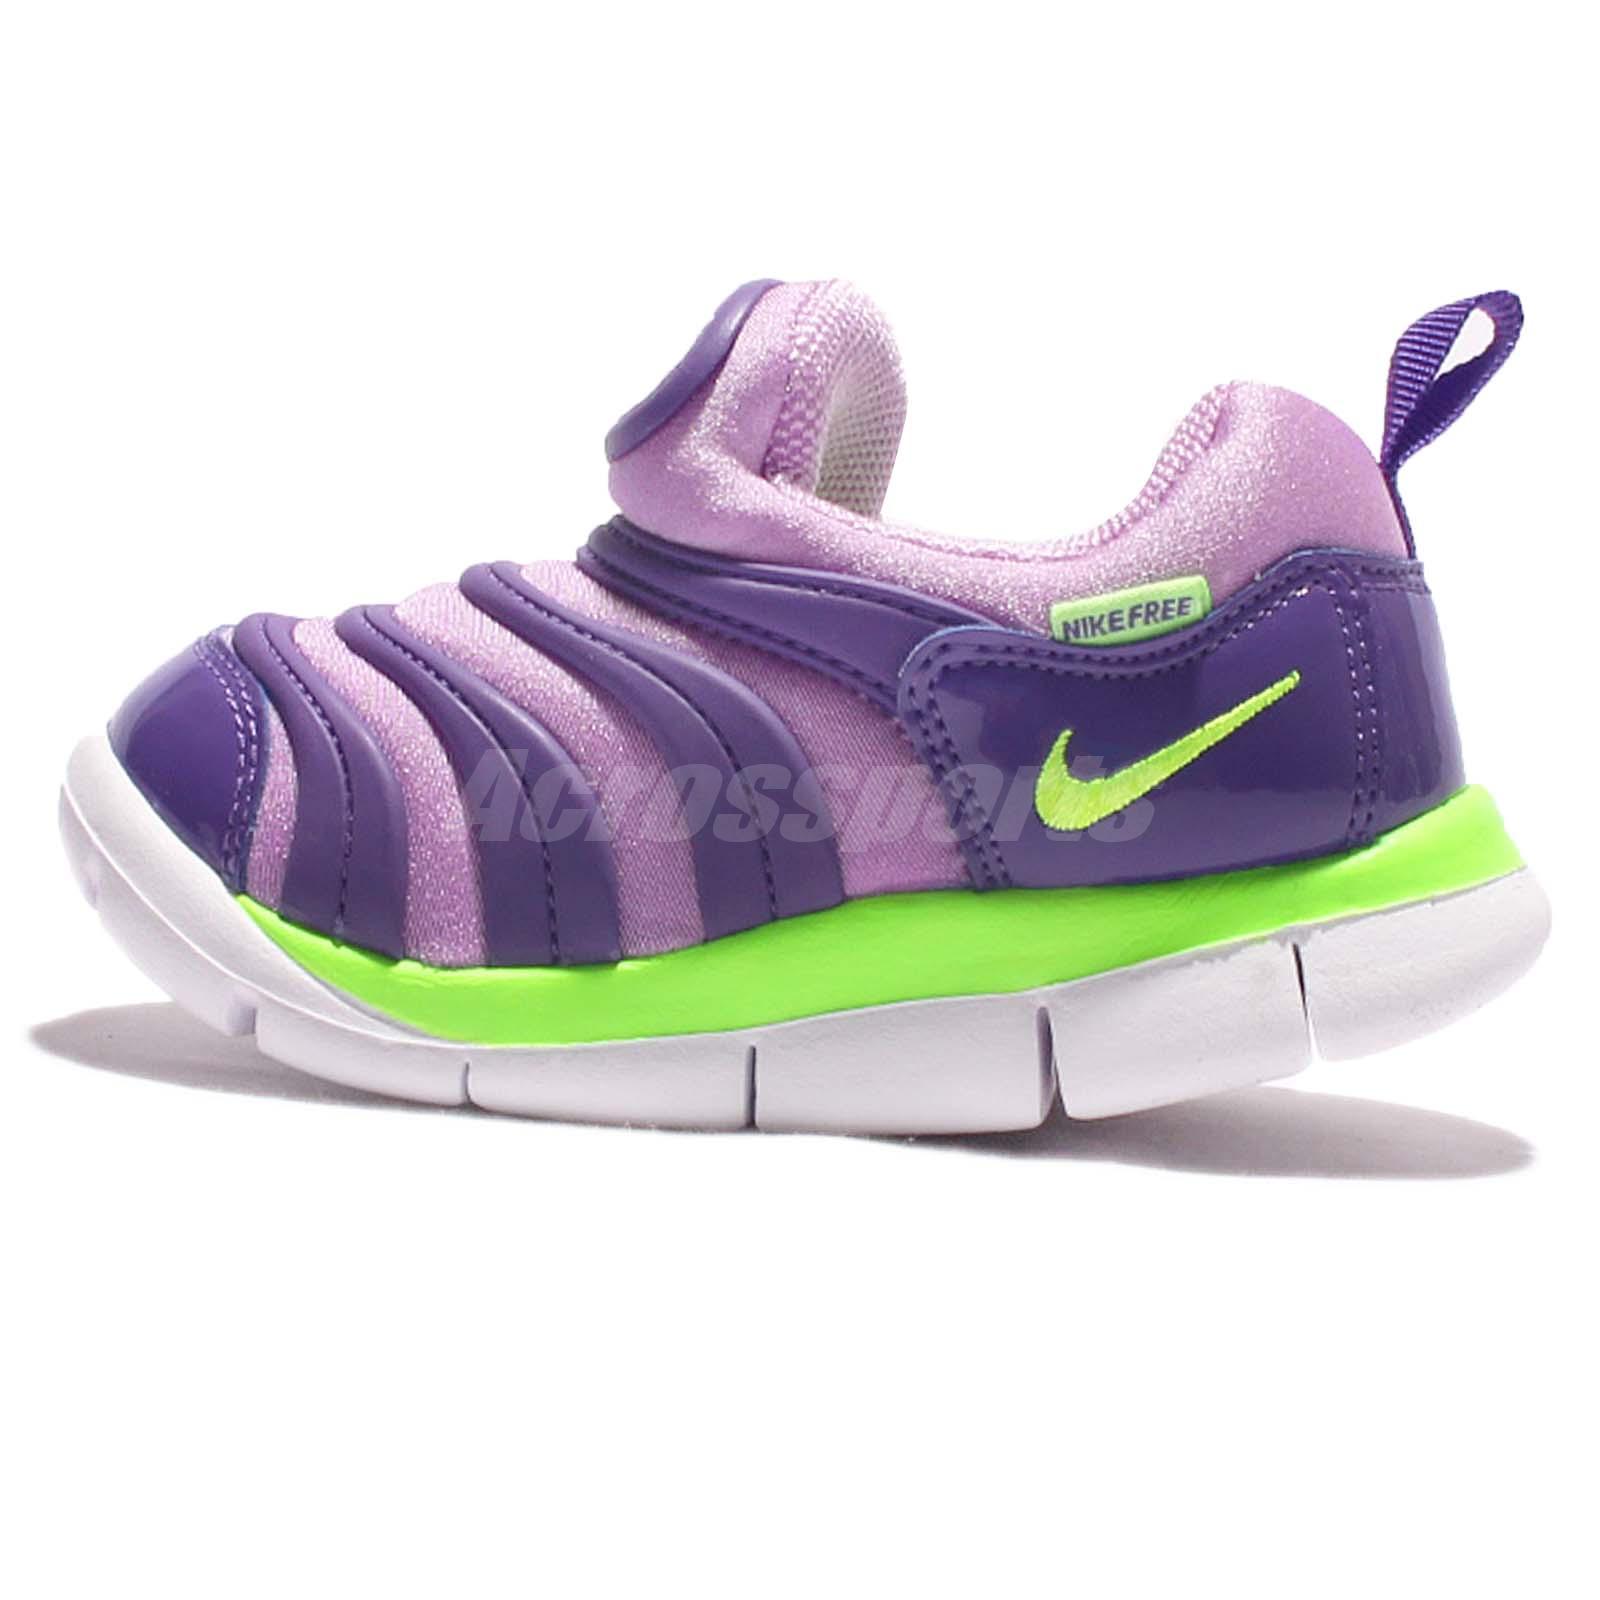 nike dynamo free hong kong, Nike Dynamo Free TD Purple Green Toddler Infant Baby Running Shoes 343938-505